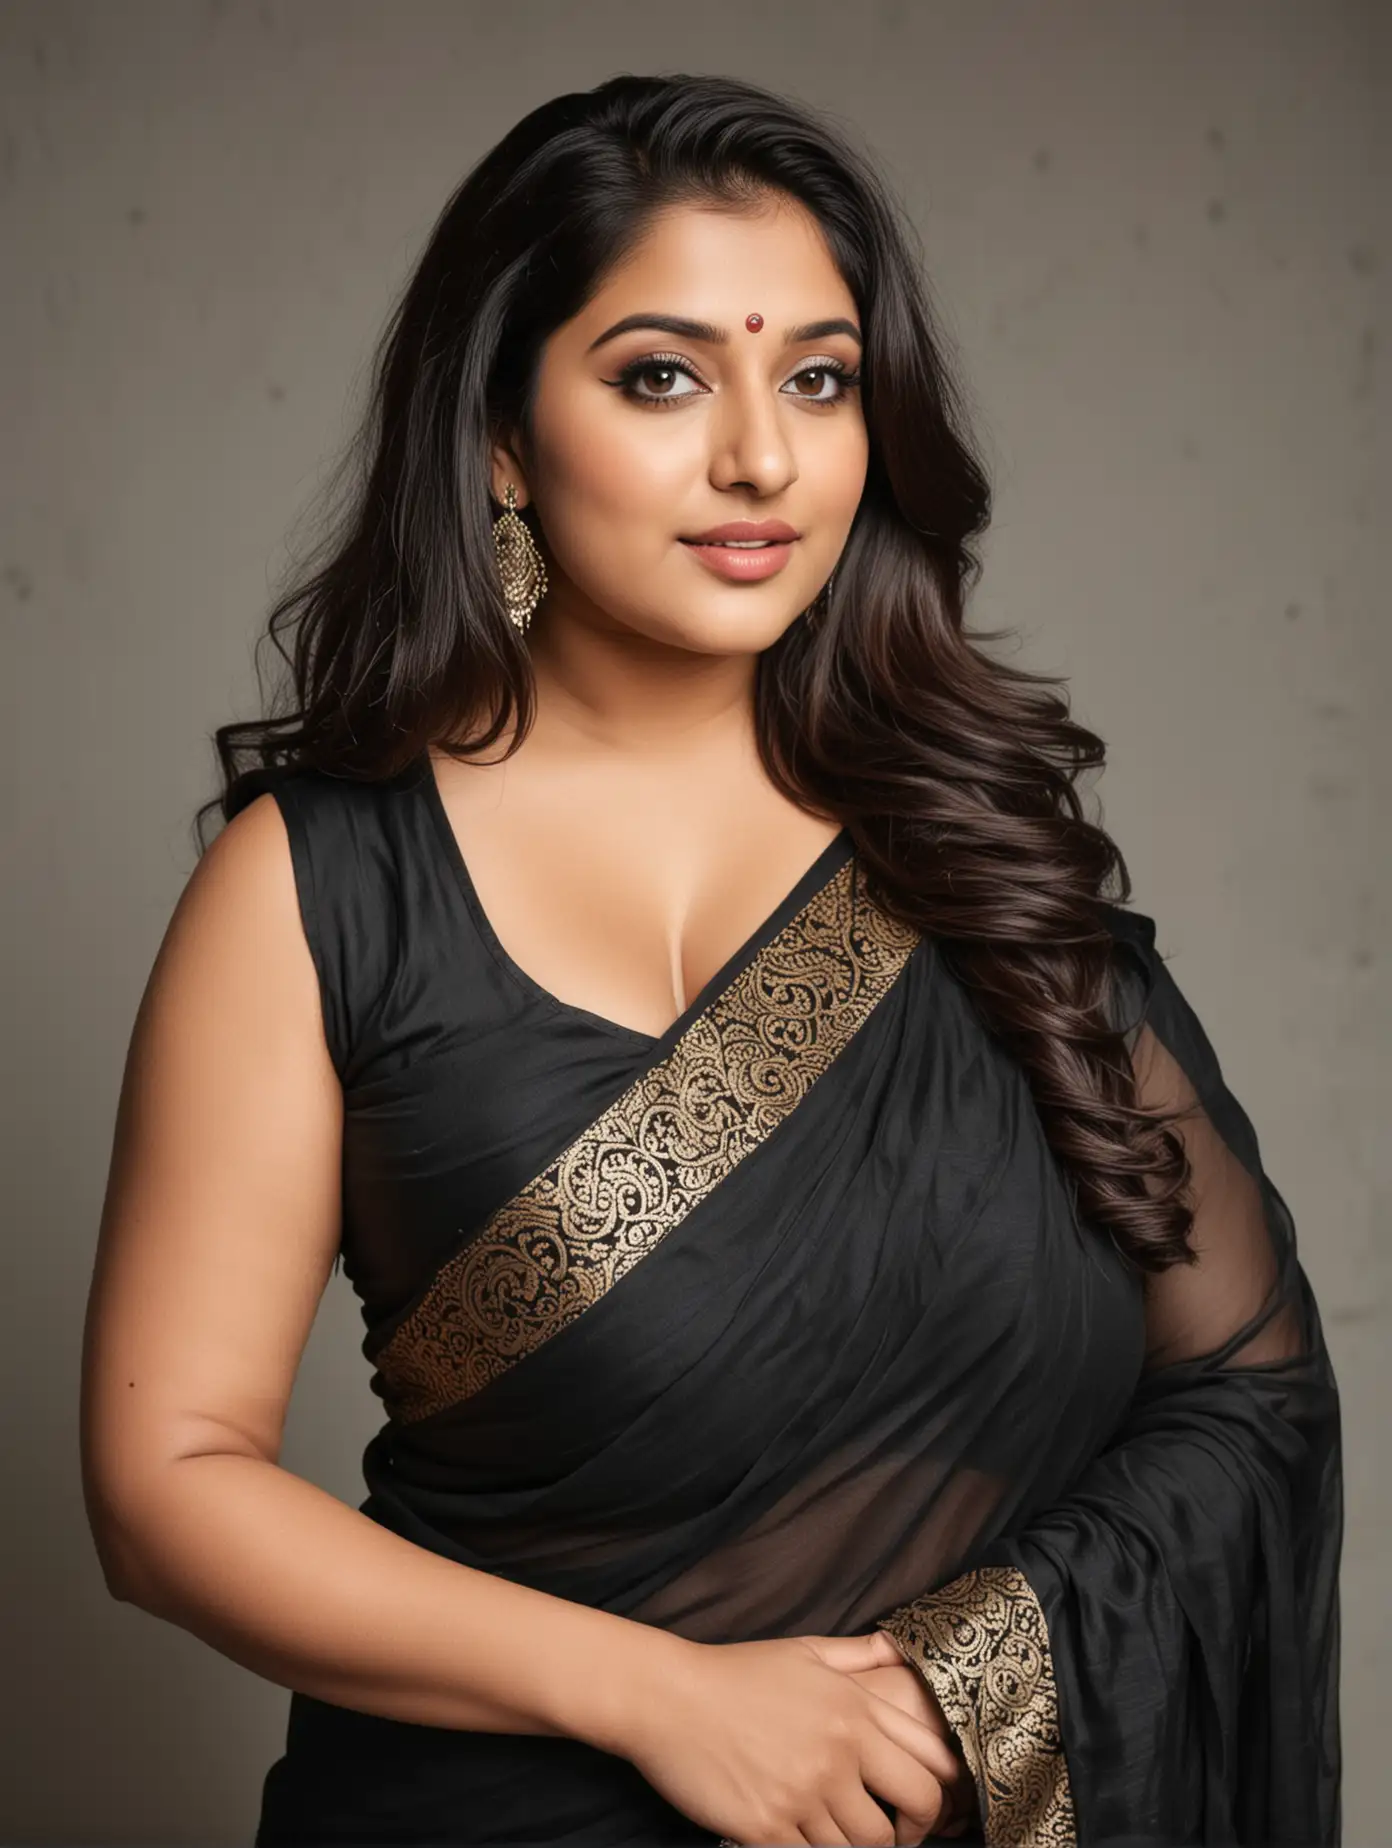 Stylish-Plus-Size-Indian-Woman-in-Black-Sleeveless-Saree